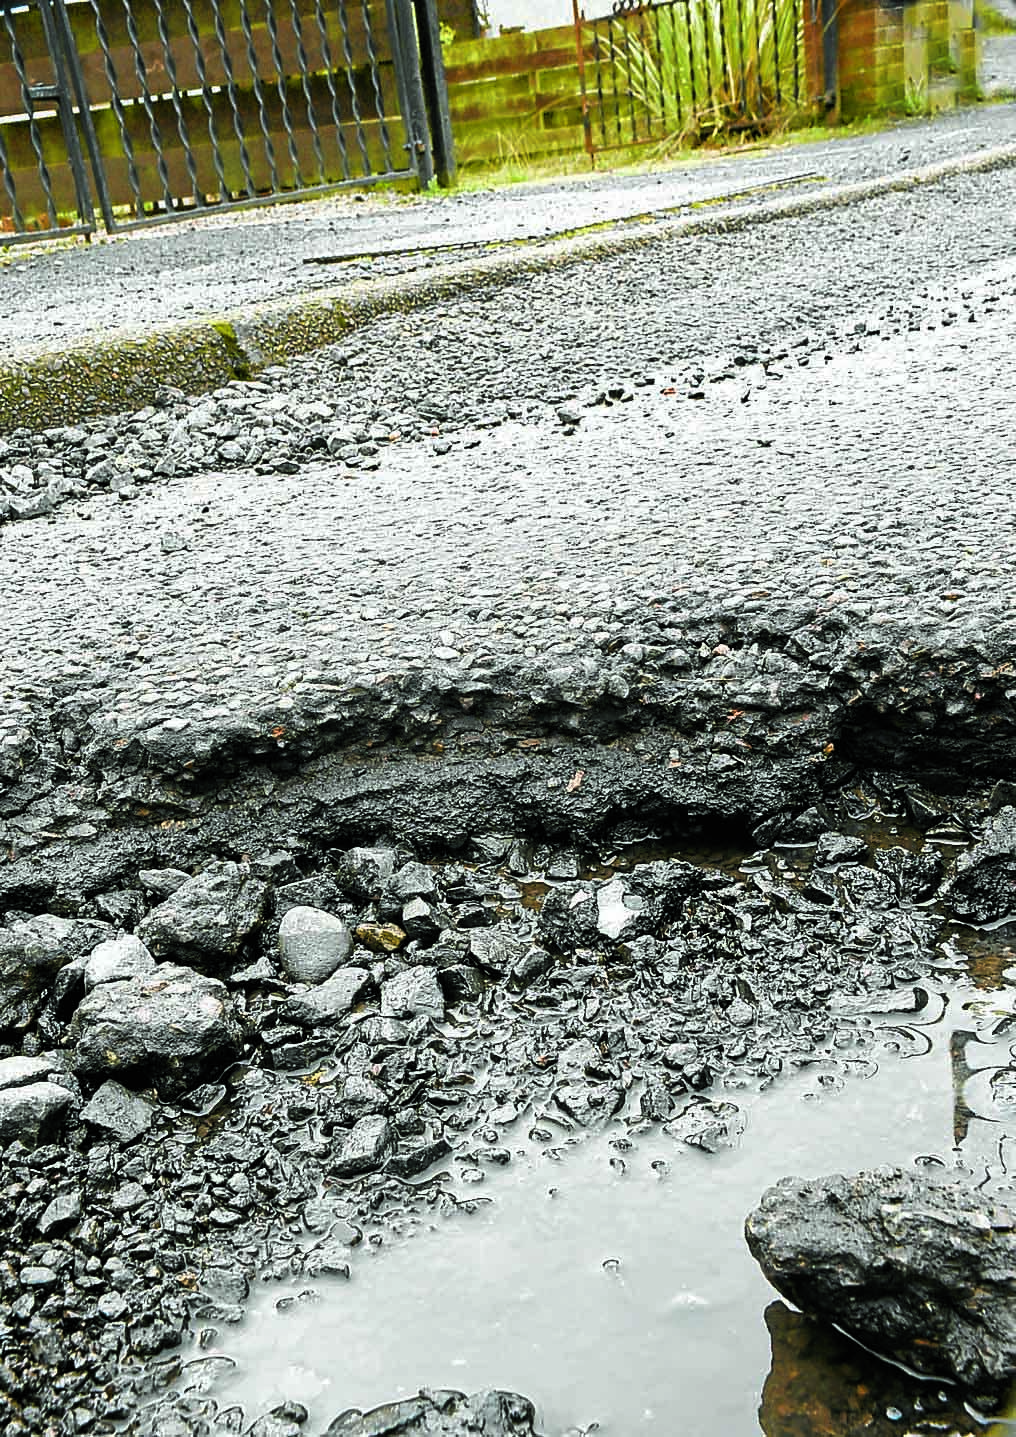 Pothole petition borne out of frustration